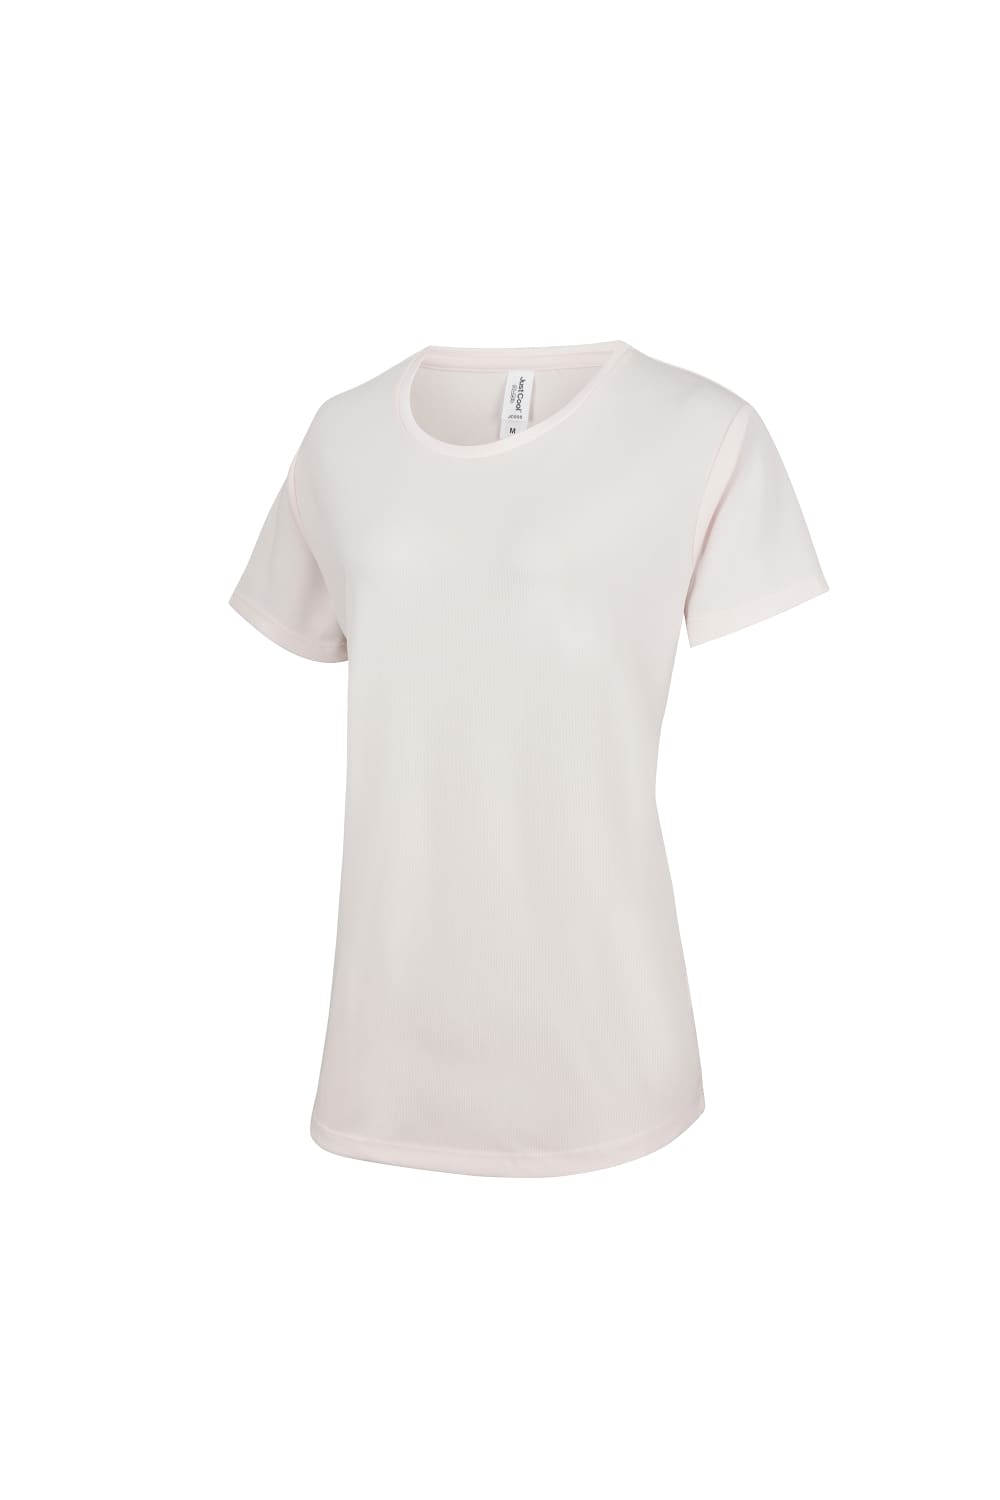 Just Cool Womens/Ladies Sports Plain T-Shirt - Blush